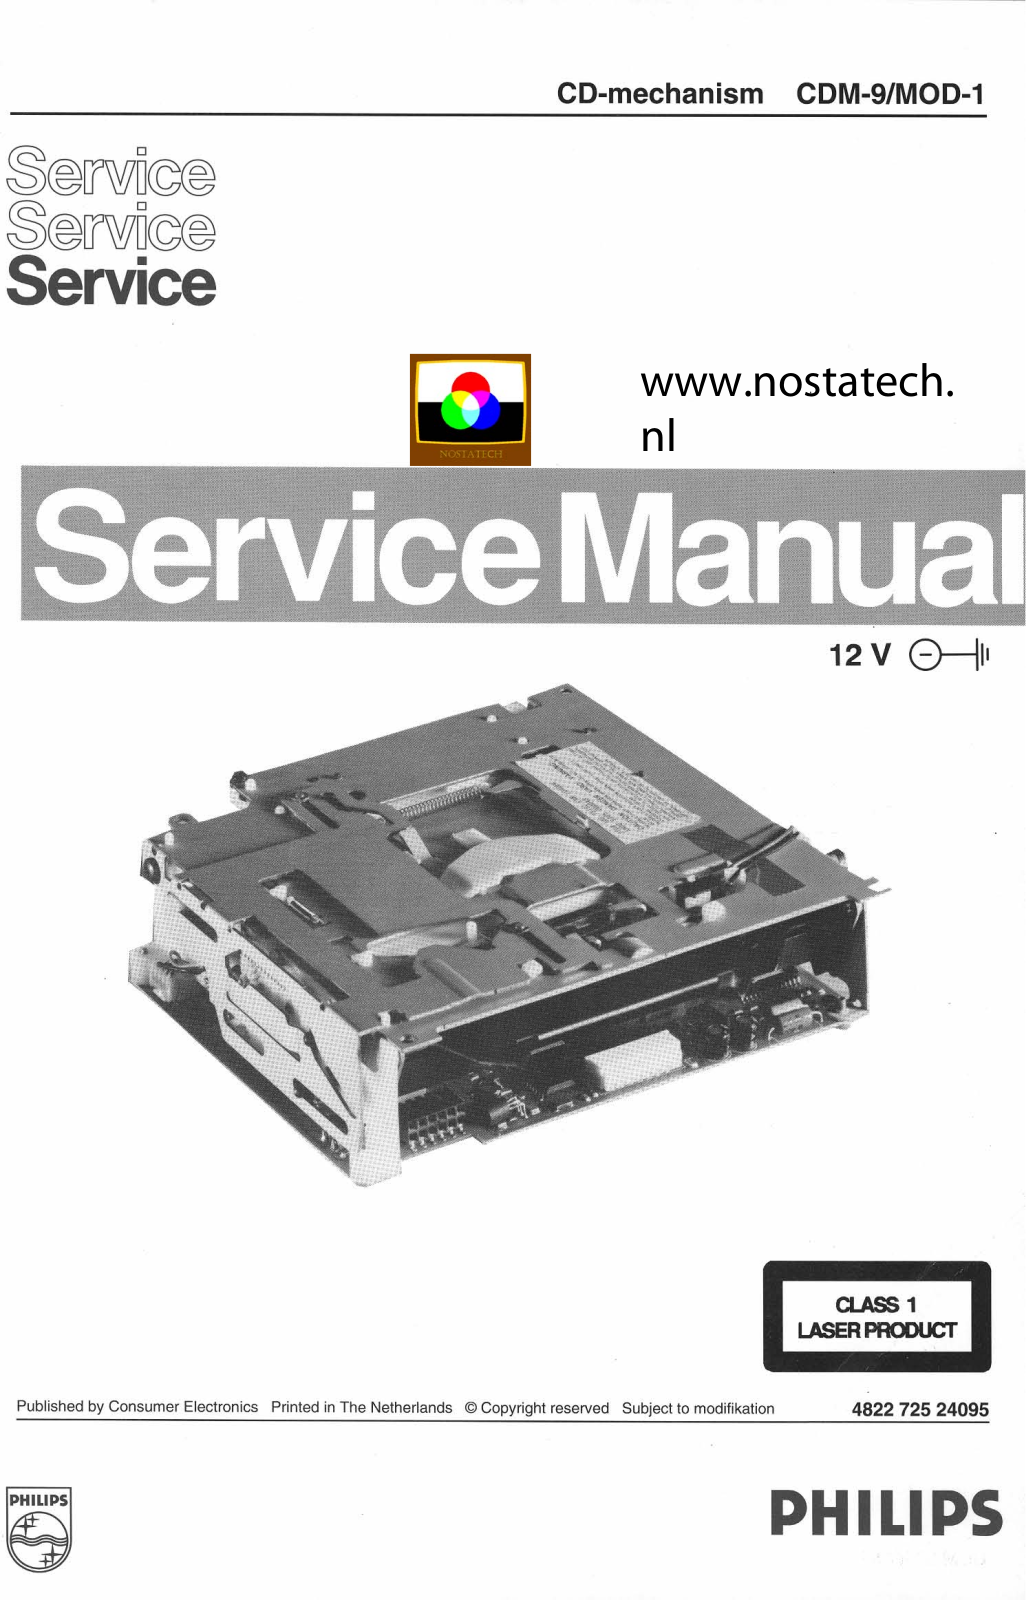 Philips CDM-9-MOD-1 Service Manual